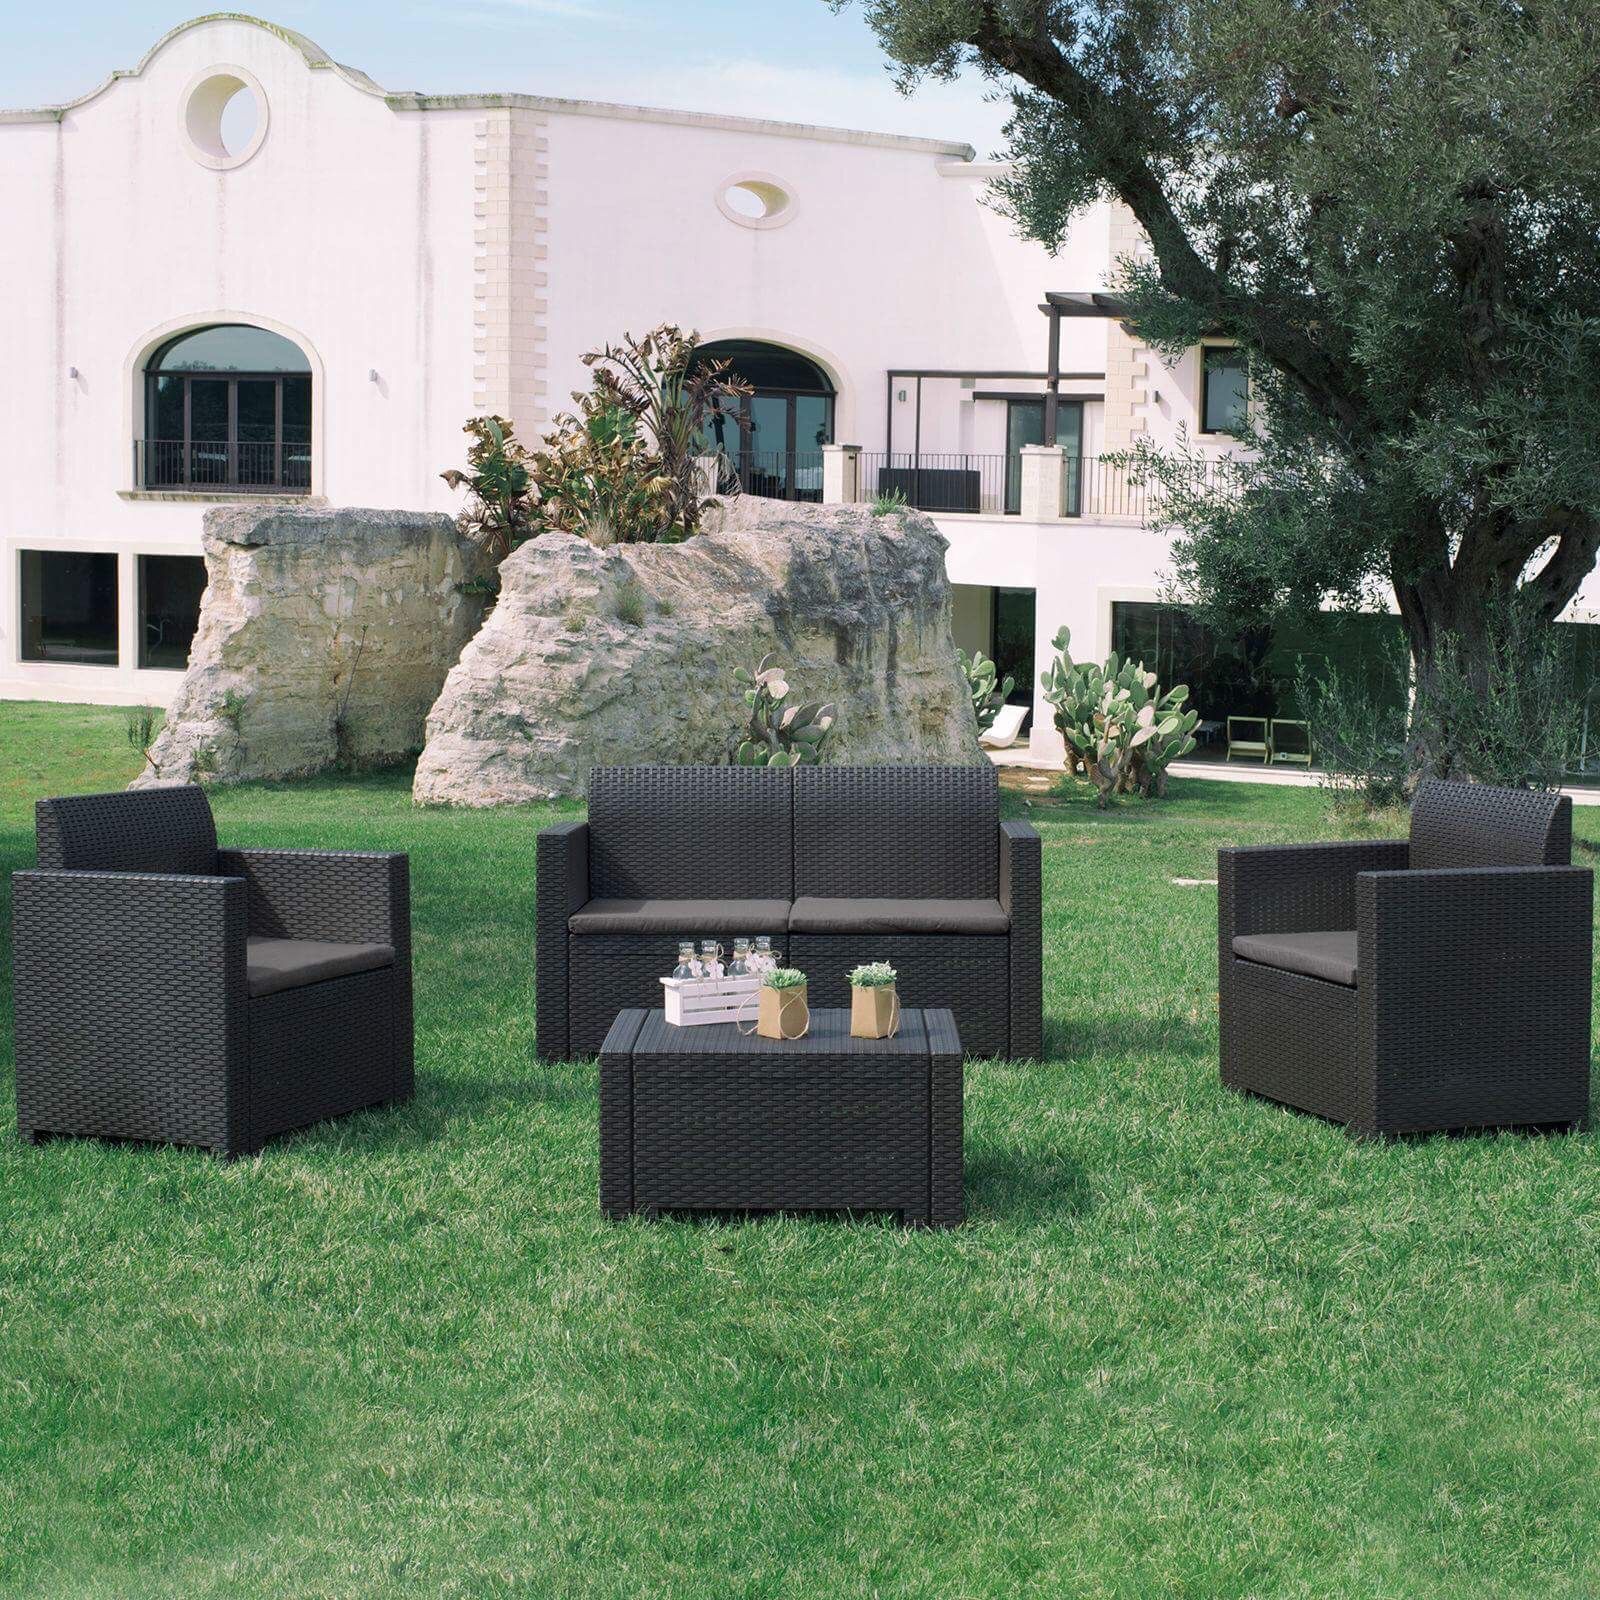 New Italian outdoor furniture in its box 1 year warranty